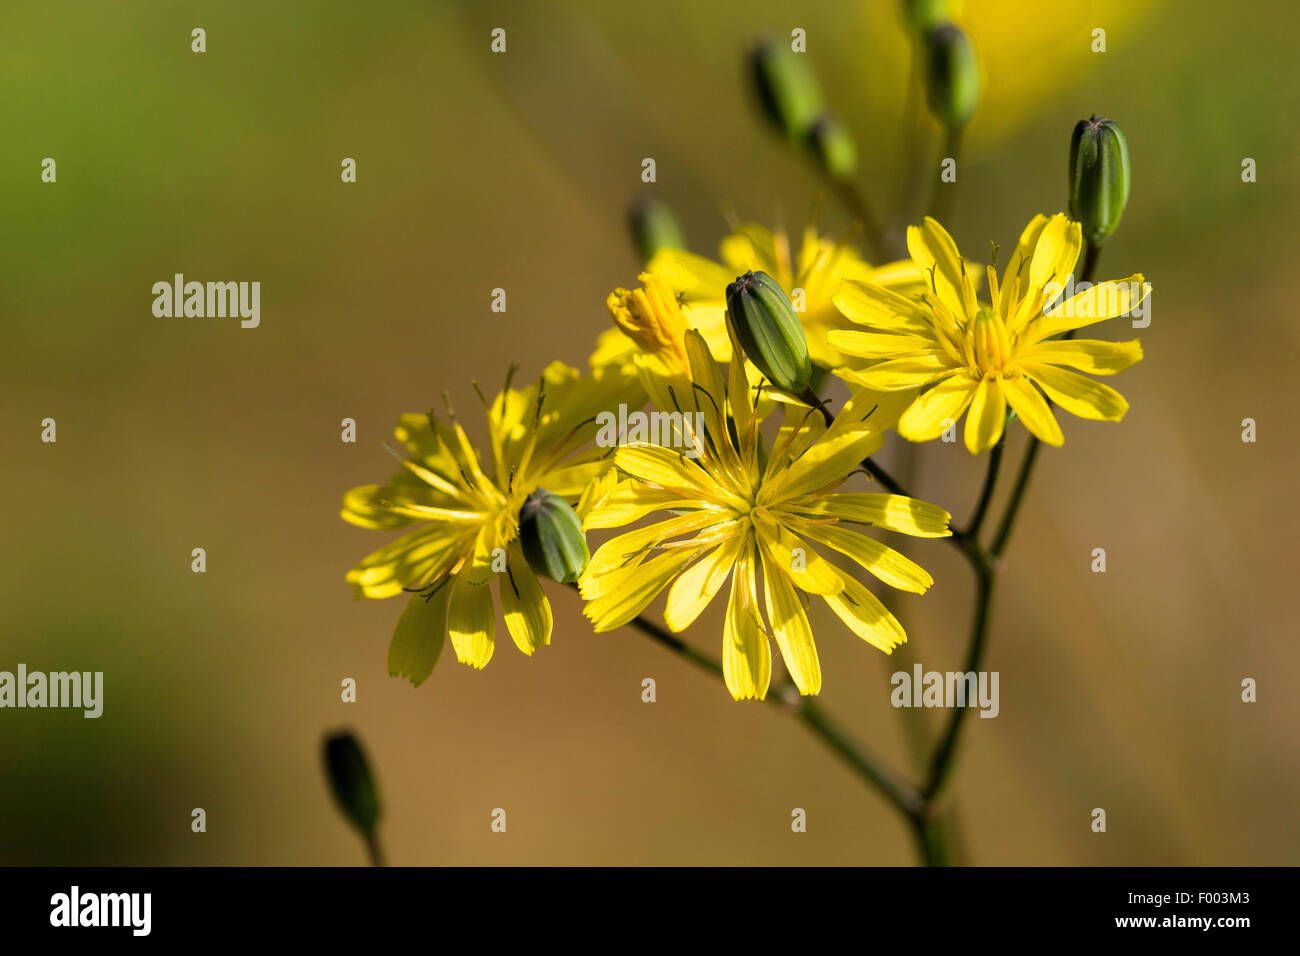 common nipplewort (Lapsana communis), blooming, Germany Stock Photo